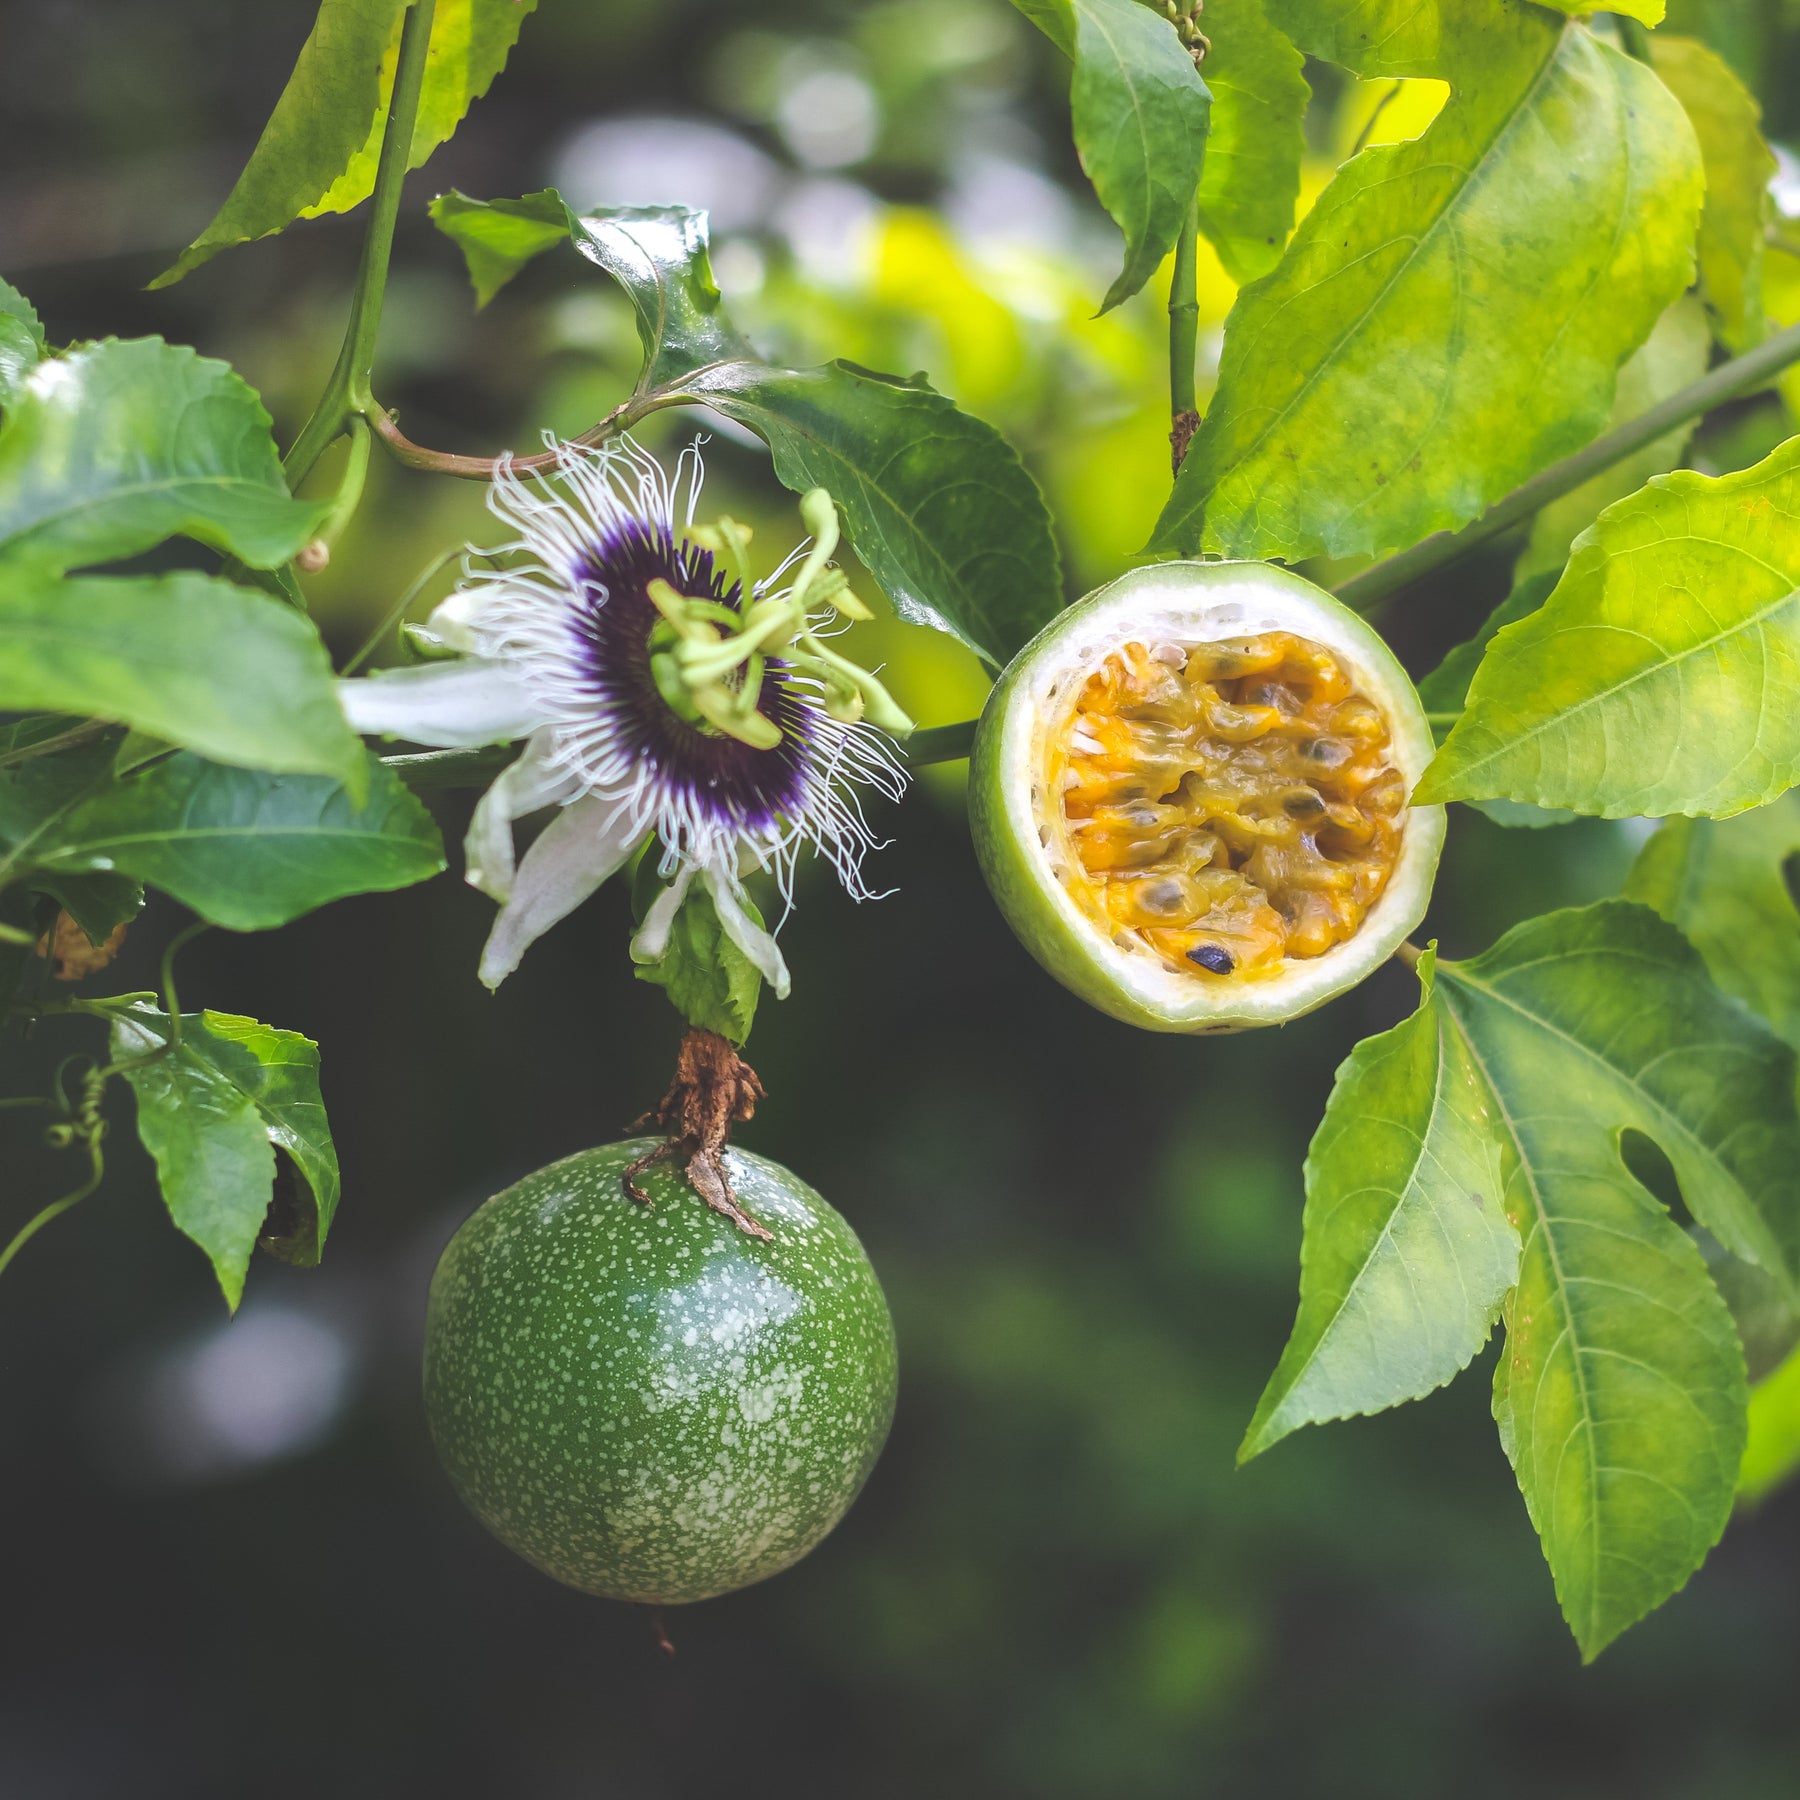 Grenadille (Passiflora edulis), fruit de la passion : plantation